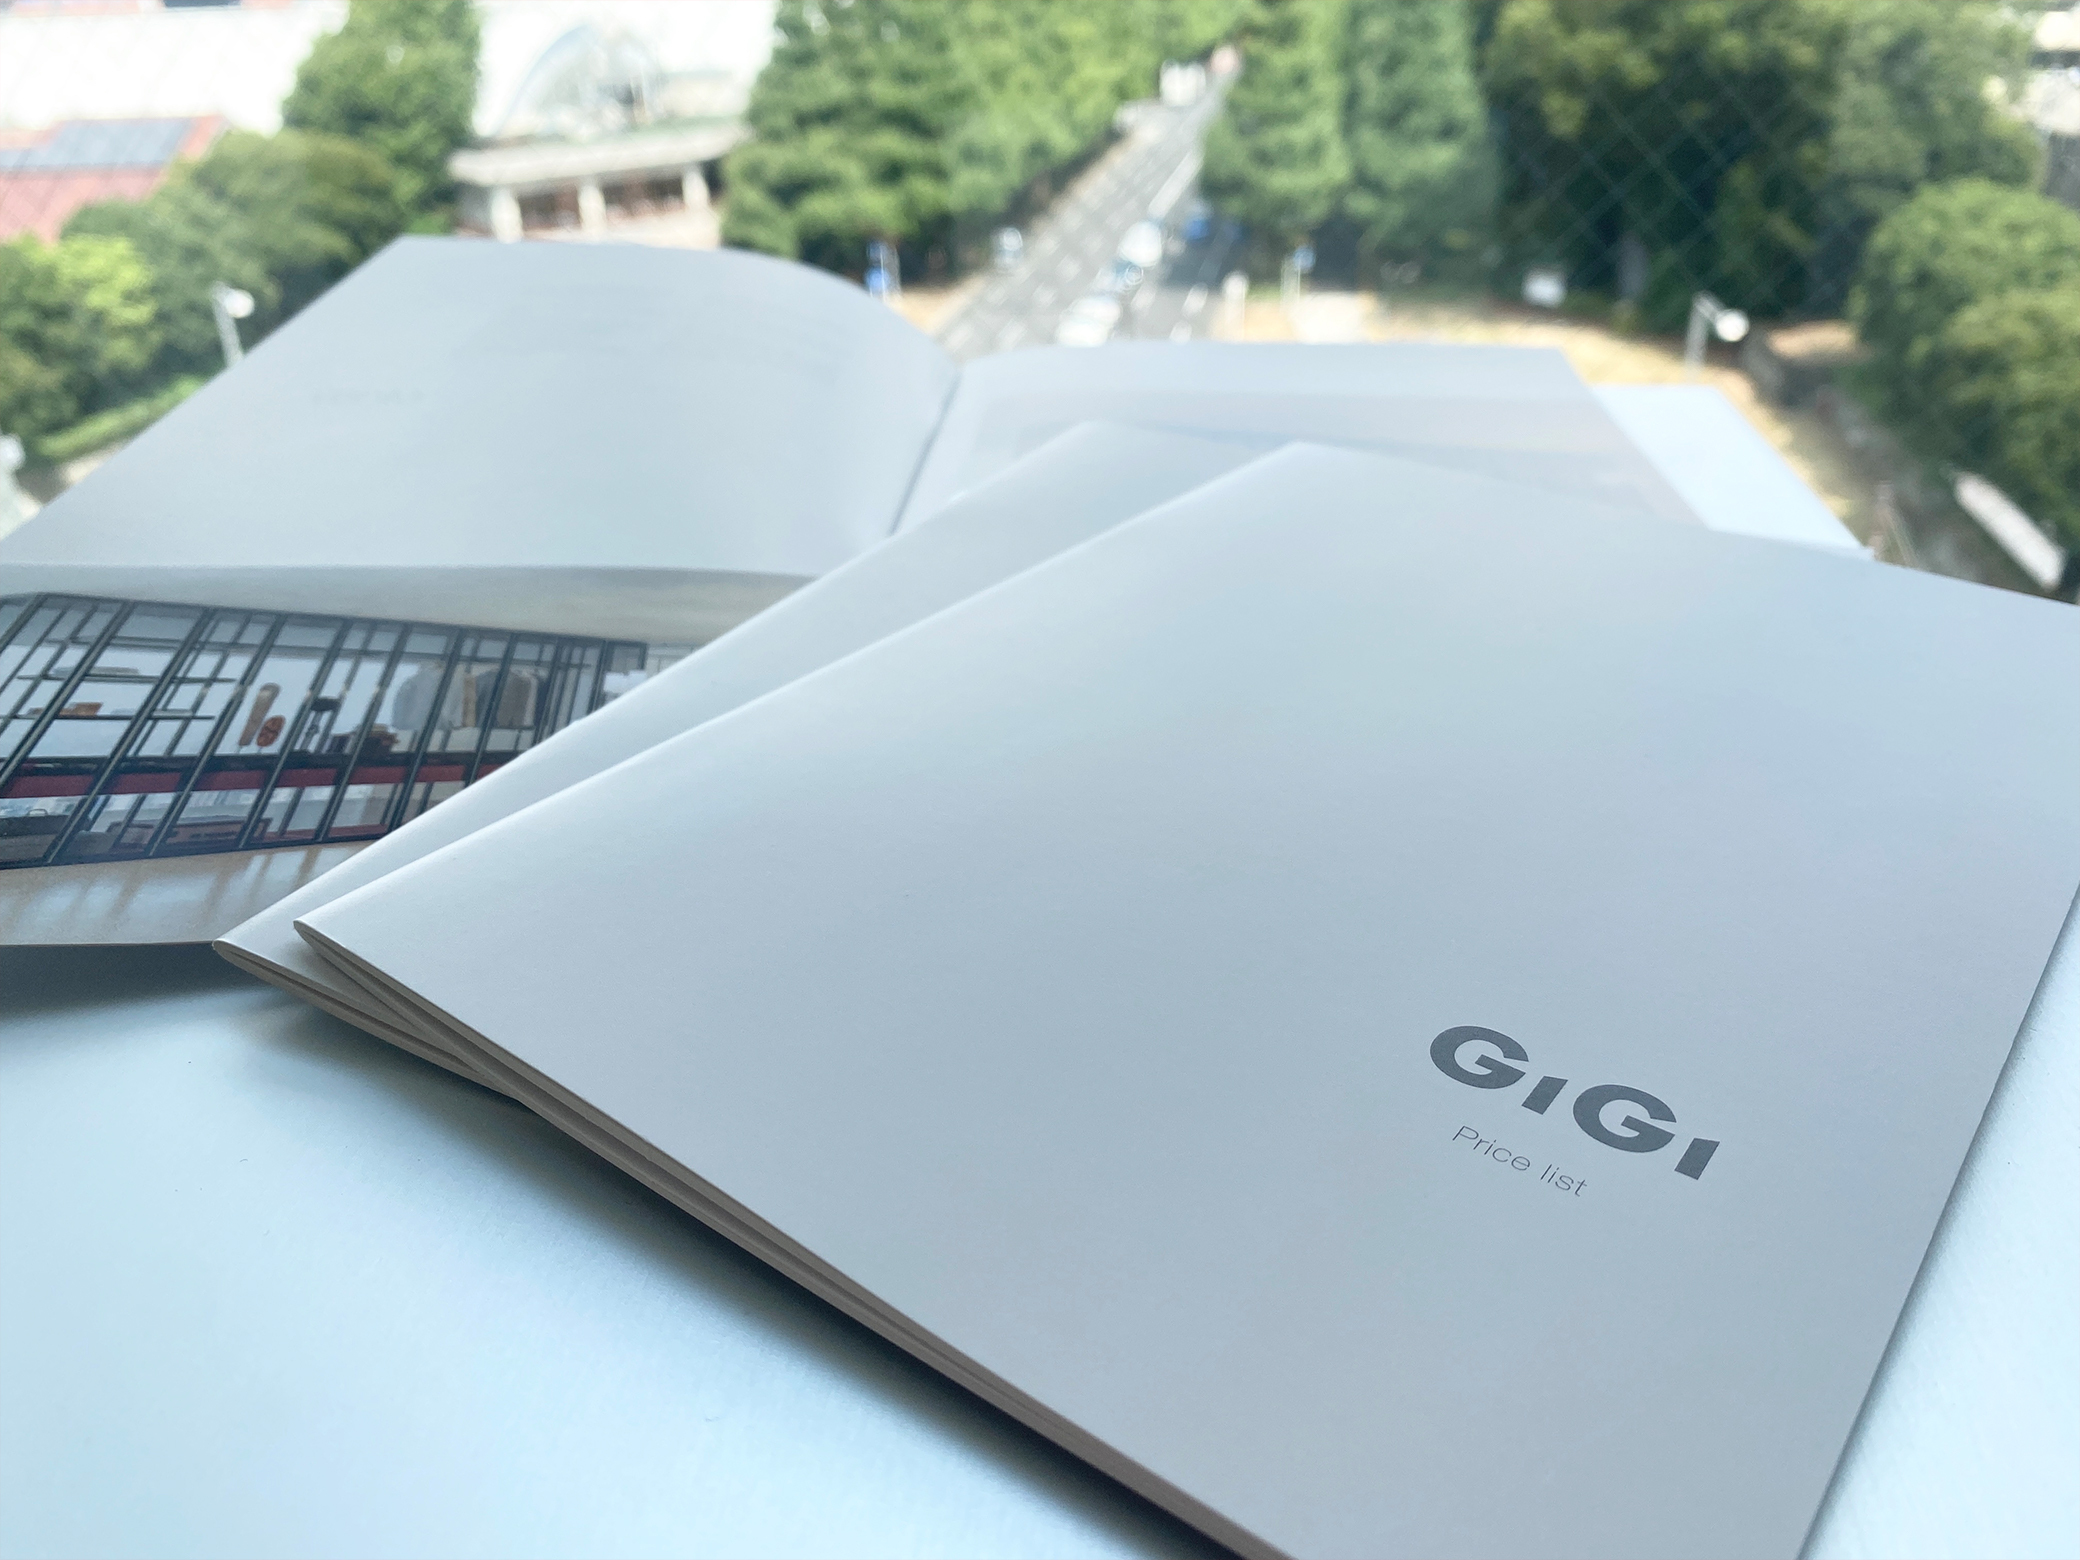 New GiGi ePole catalog has been released!